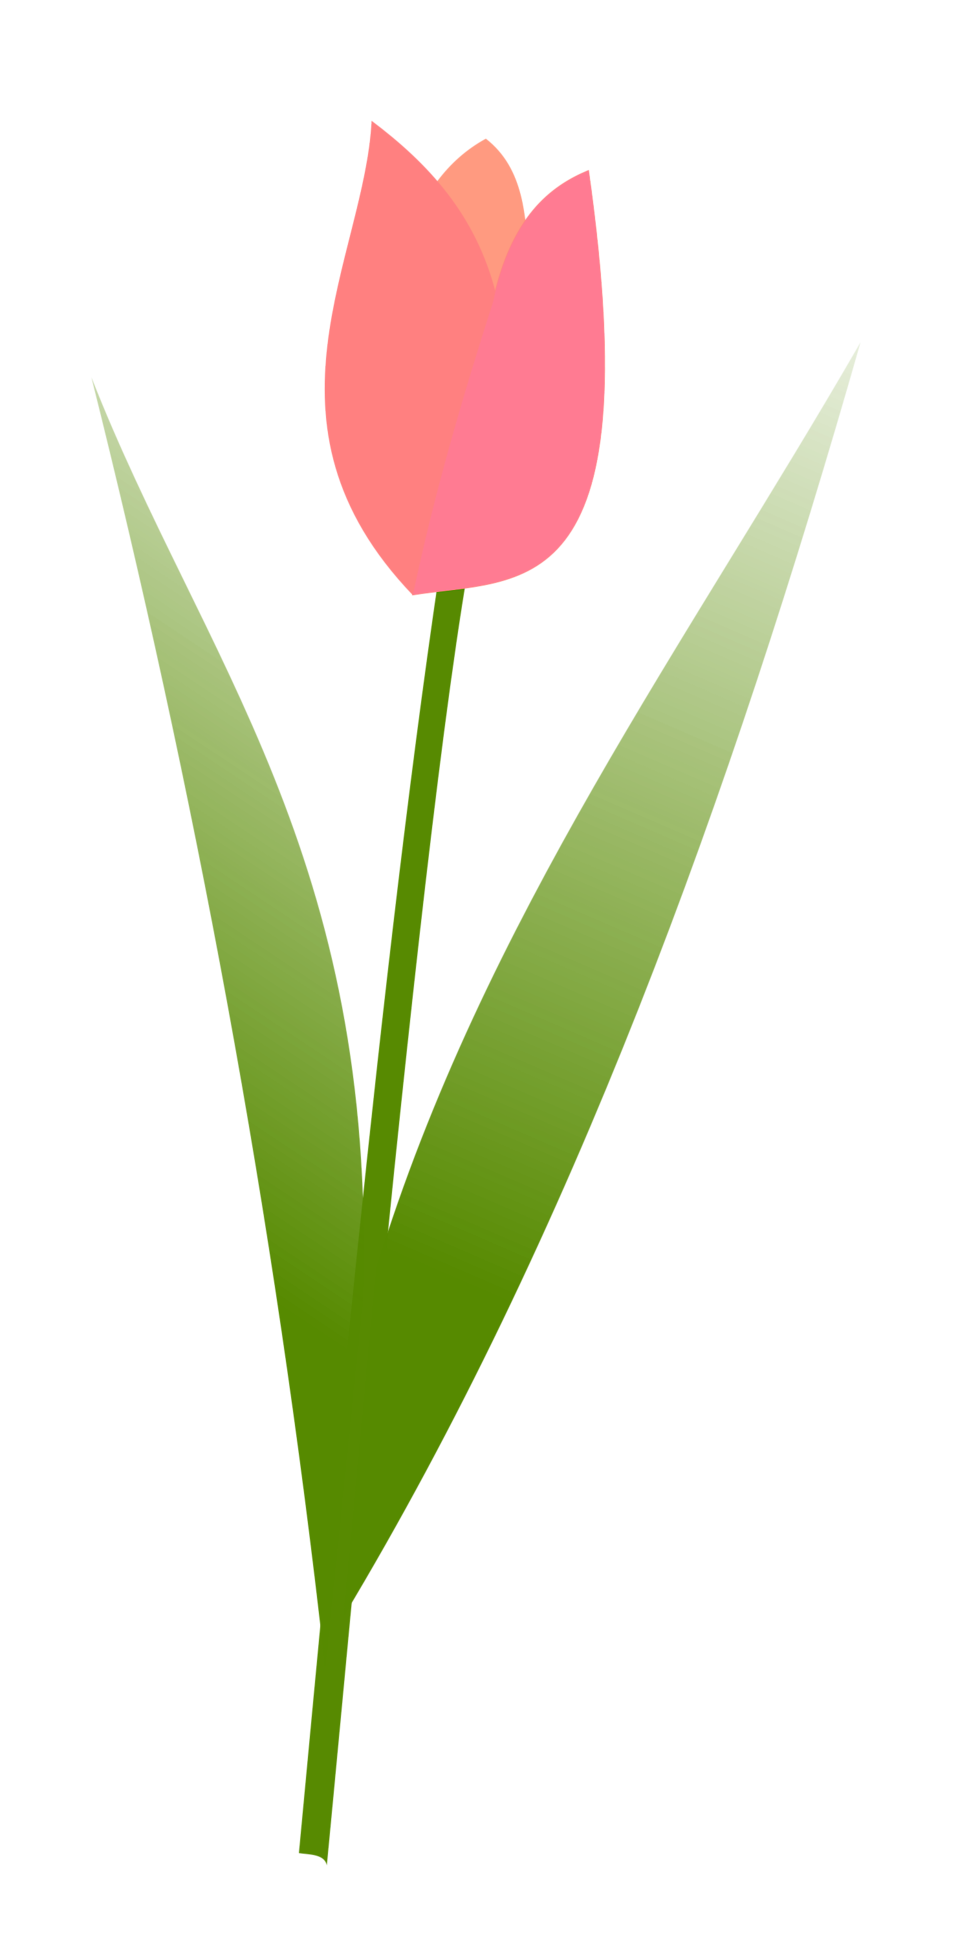 Free stock photo illustration. Outline clipart tulip